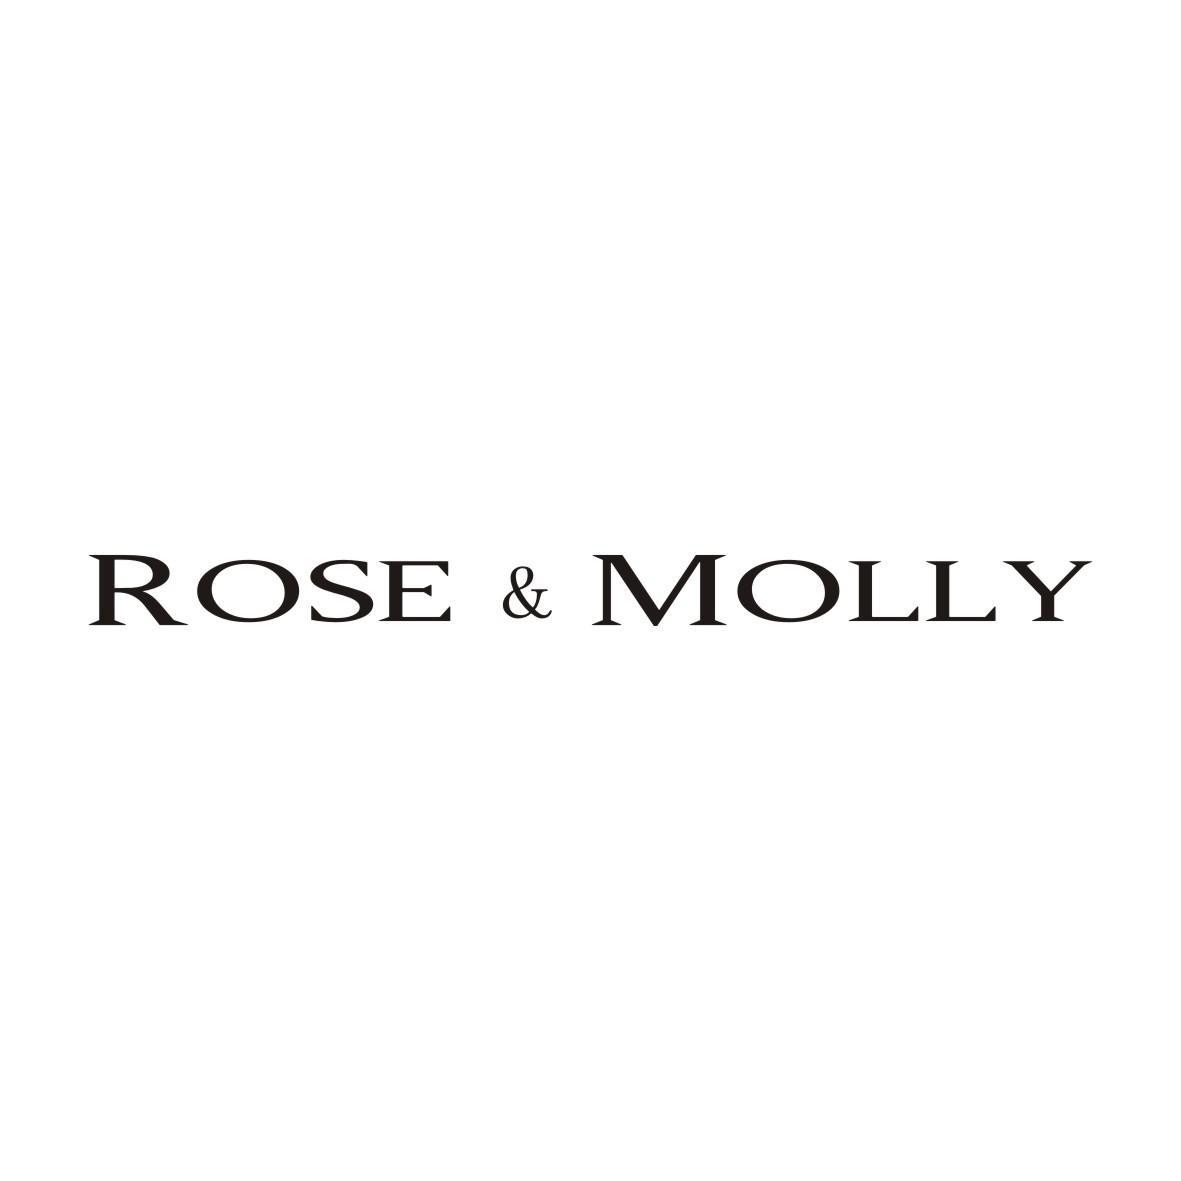 ROSE & MOLLY